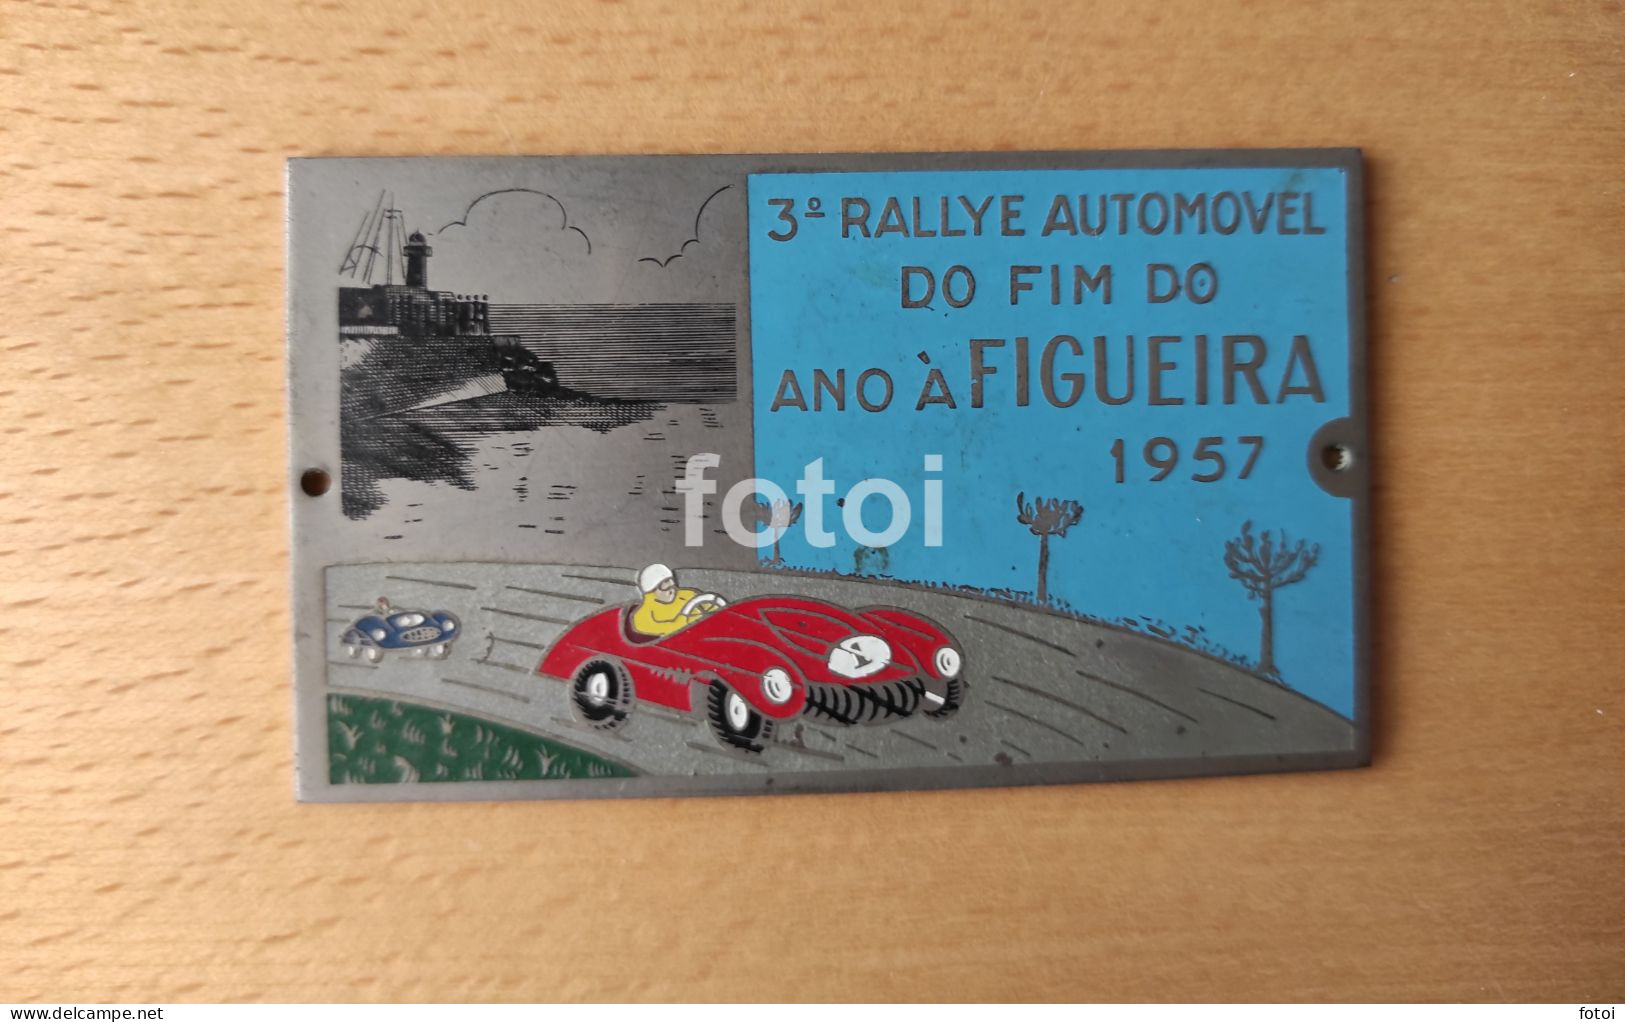 1957 III RALLYE RALLY RALI CAR RACING FIGUEIRA DA FOZ COIMBRA PORTUGAL PLACA ENAMEL BADGE MEDAL - Rally